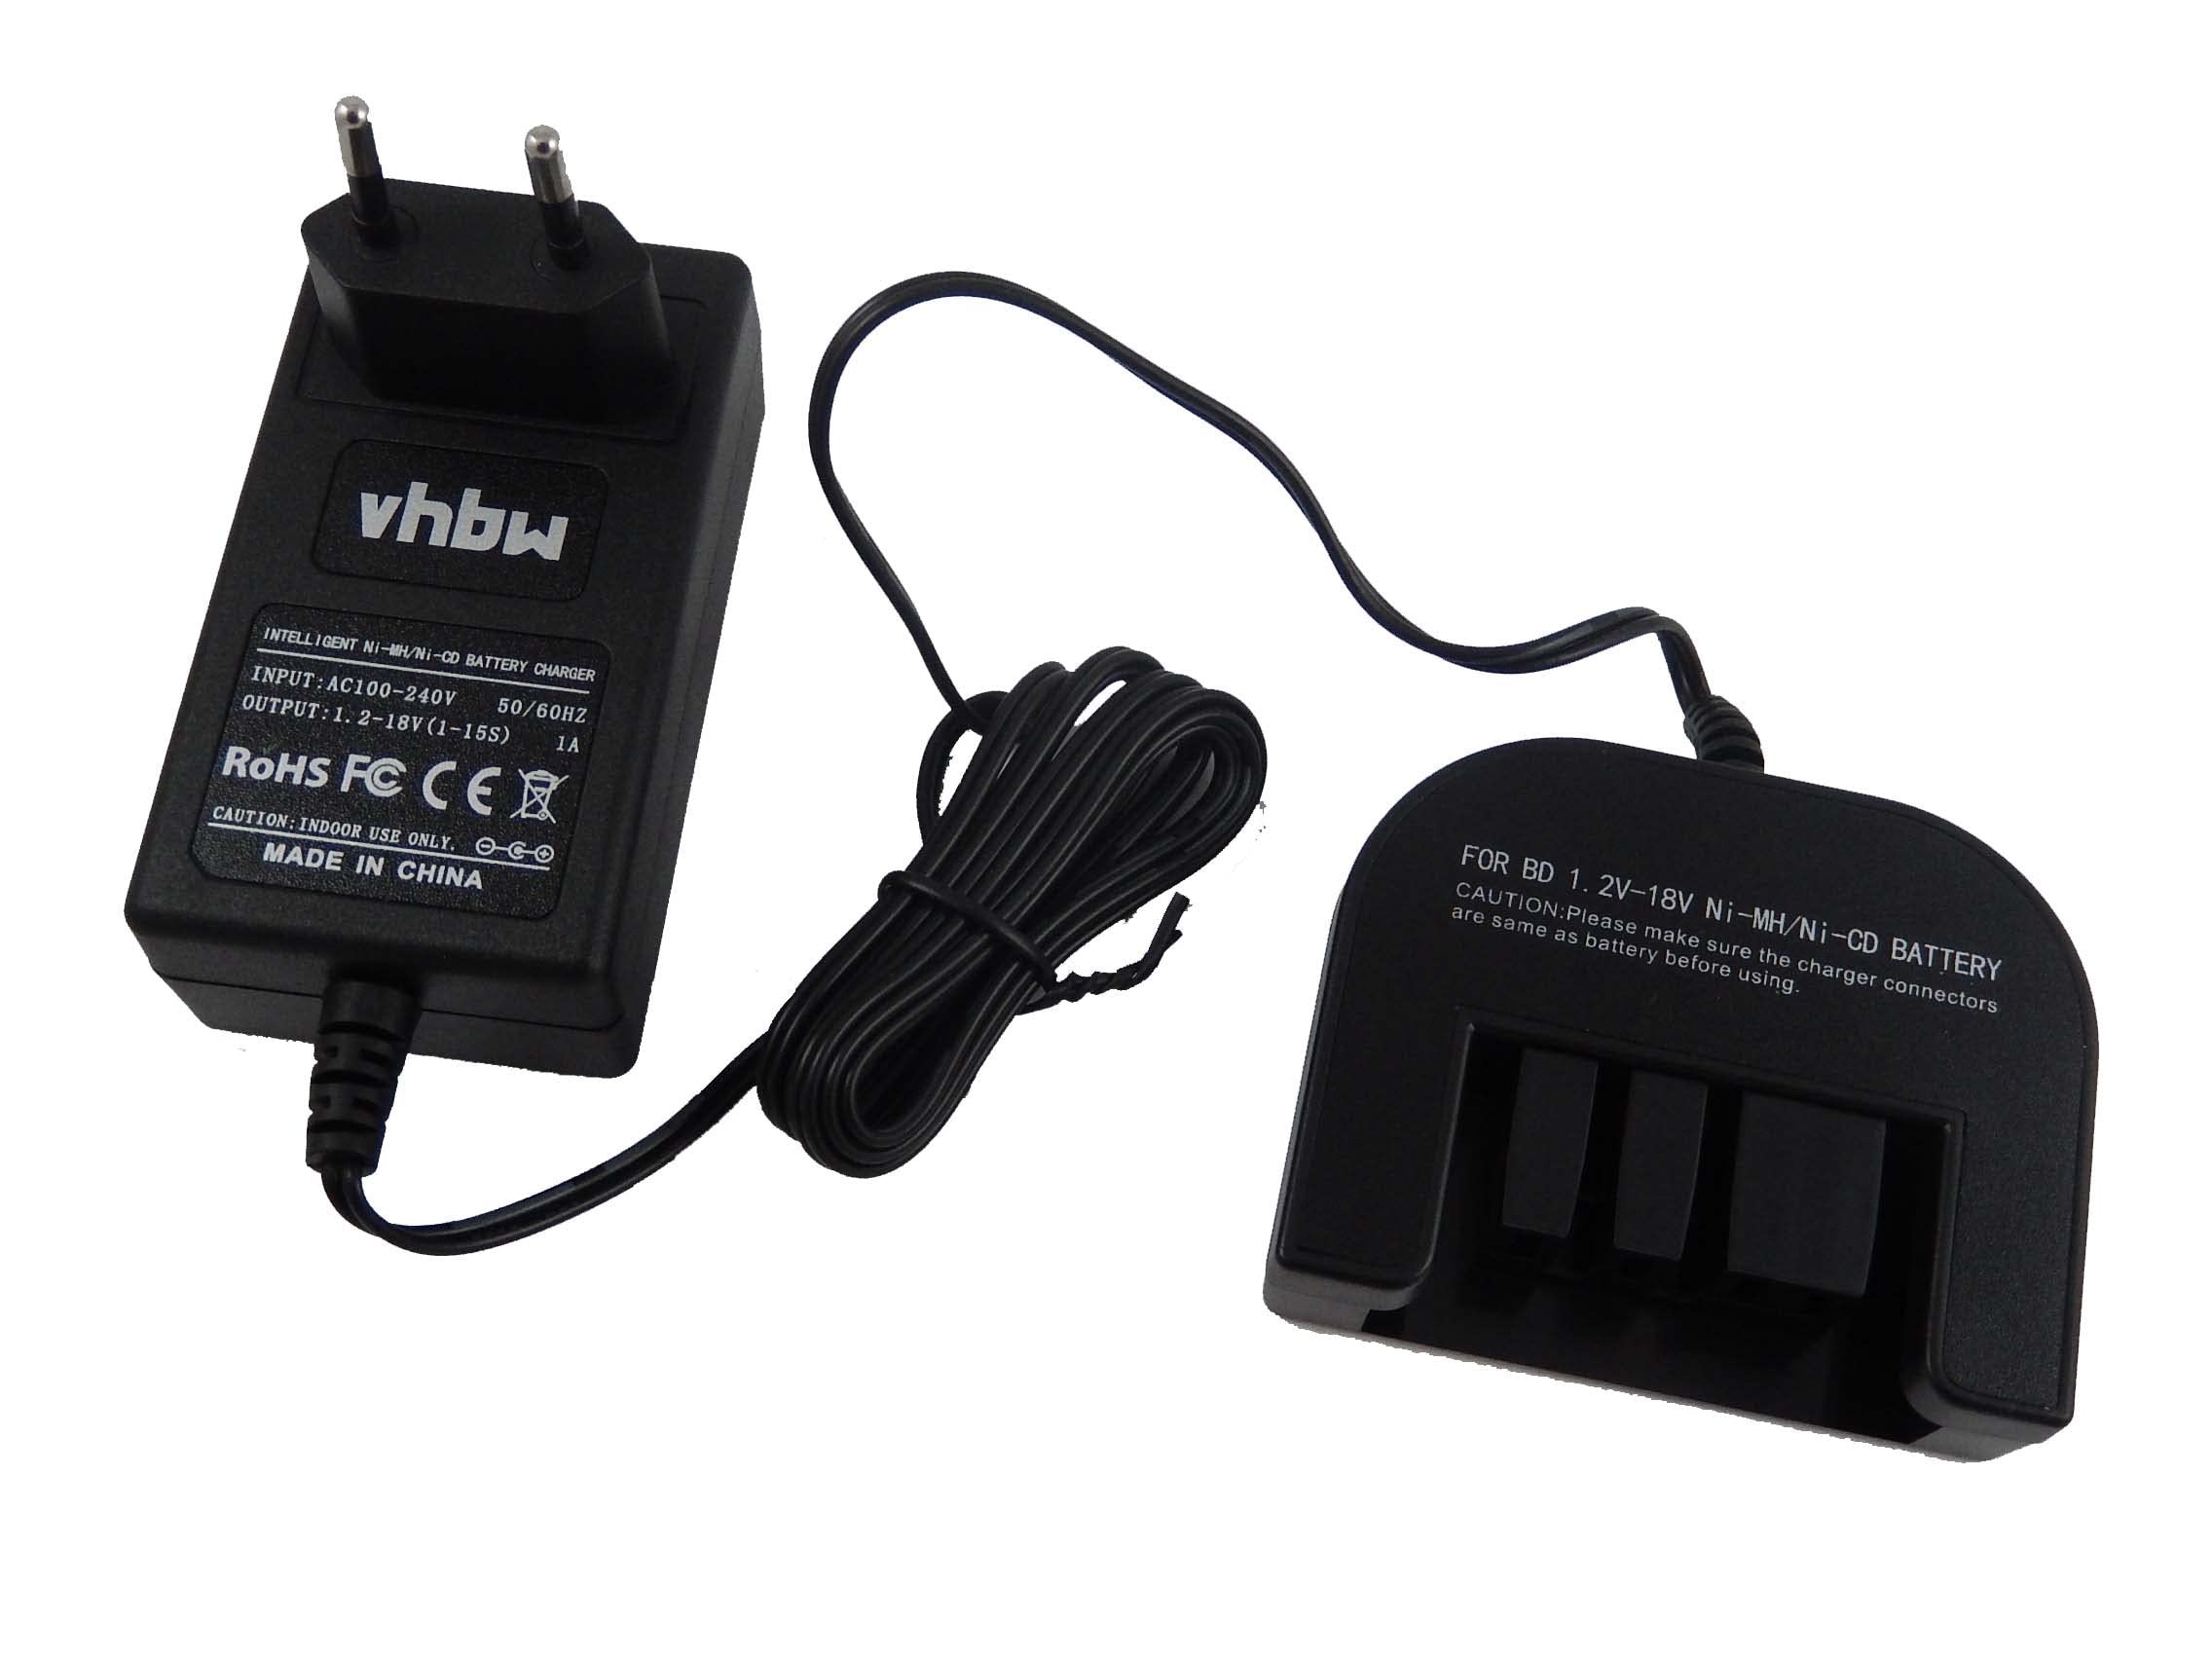 vhbw 220V Netzteil Ladegerät Ladekabel kompatibel mit Werkzeug Akku Black & Decker 499936-34, 499936-35, A12, A12-XJ, A12EX, A14, A144, A144EX, A14F, A1712